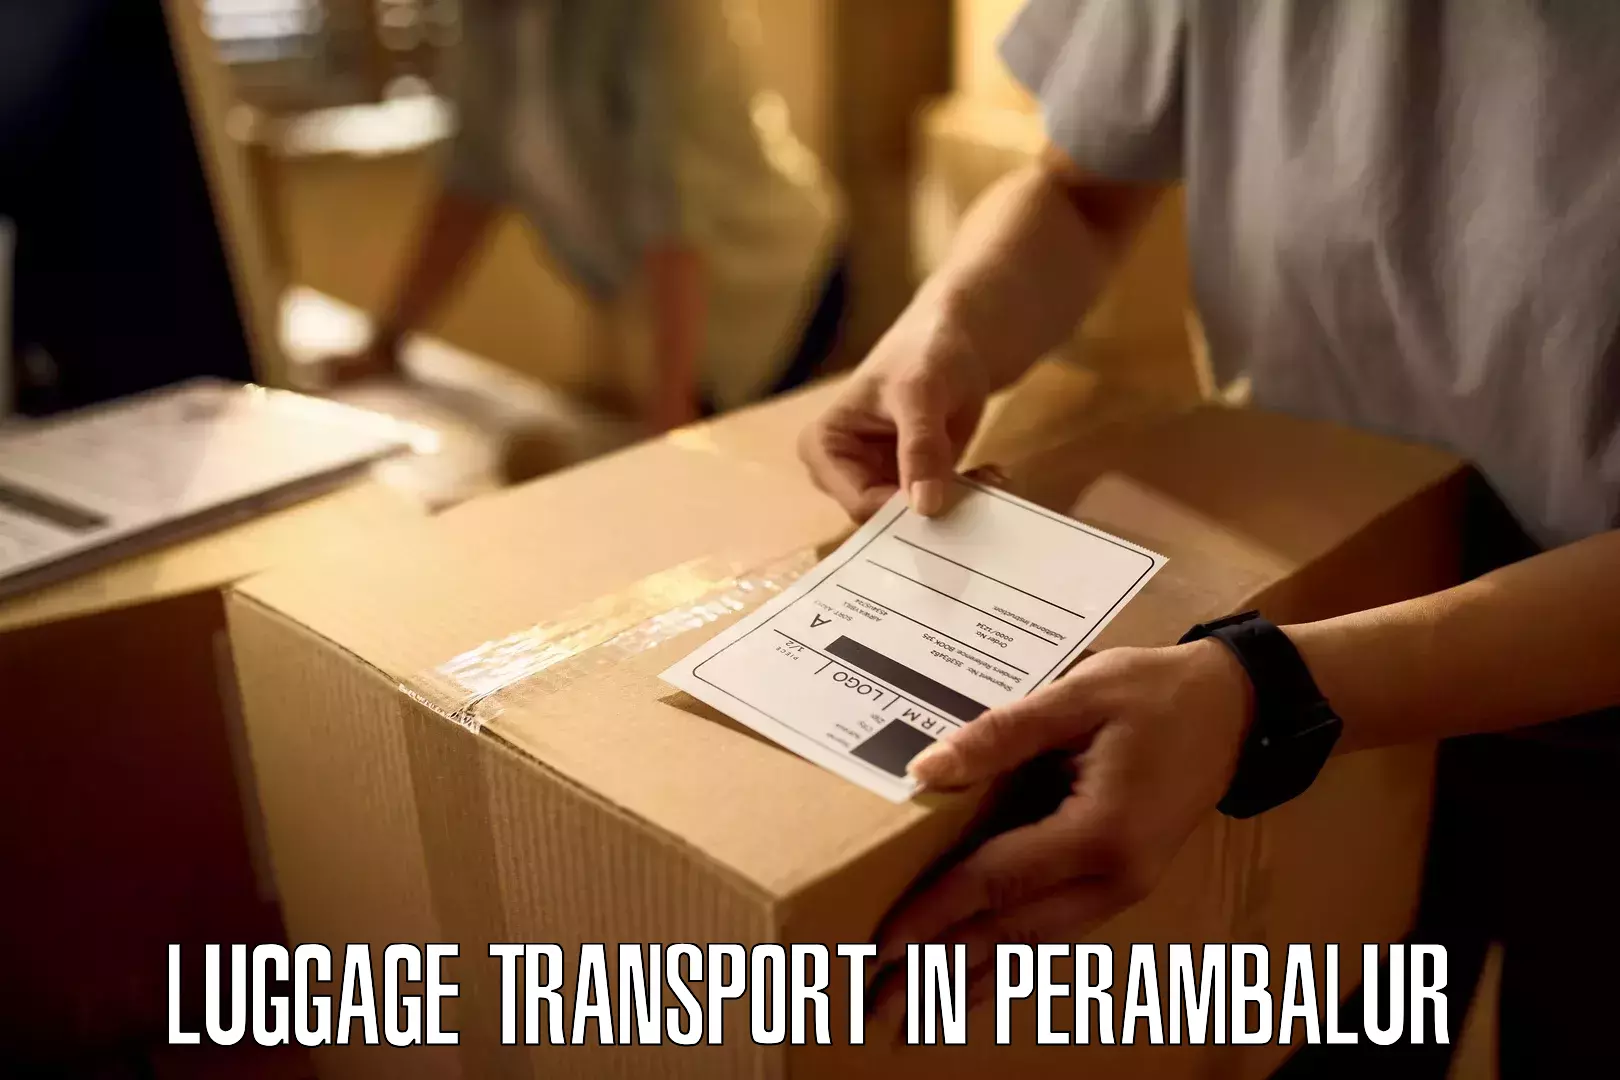 Luggage transfer service in Perambalur